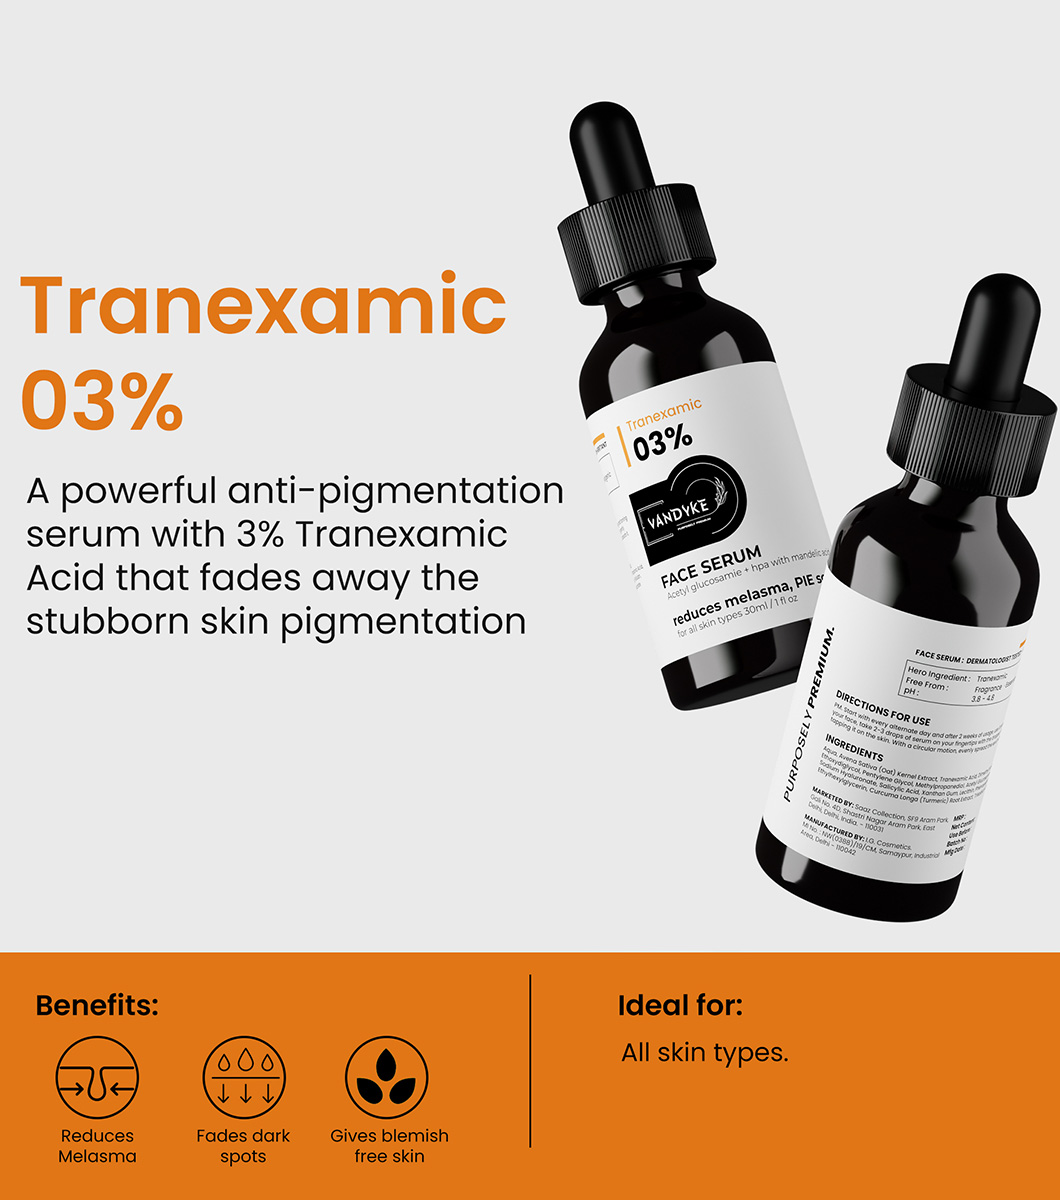 Tranexamic 03% - Vandyke